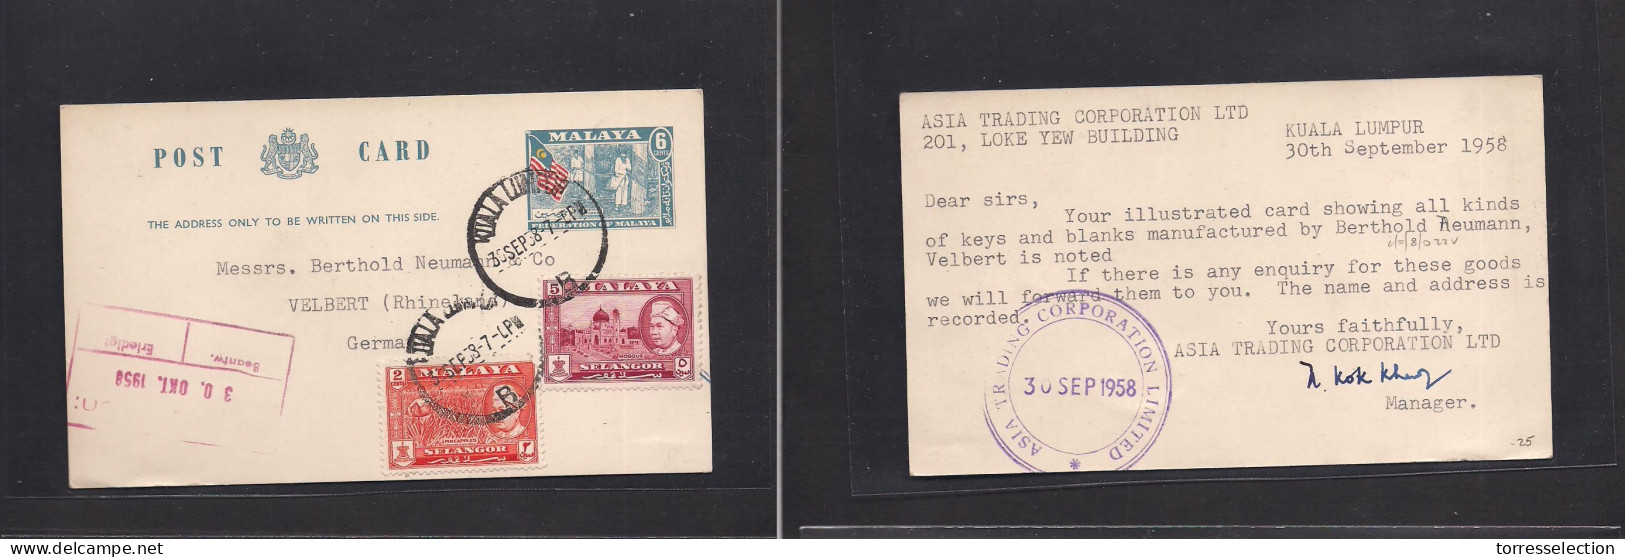 MALAYSIA. 1958 (30 Sept) KL - Germany, Velbut (30 Oct) 6c Blue Stat Card + 2 Adtls. Fine Used. XSALE. - Malaysia (1964-...)